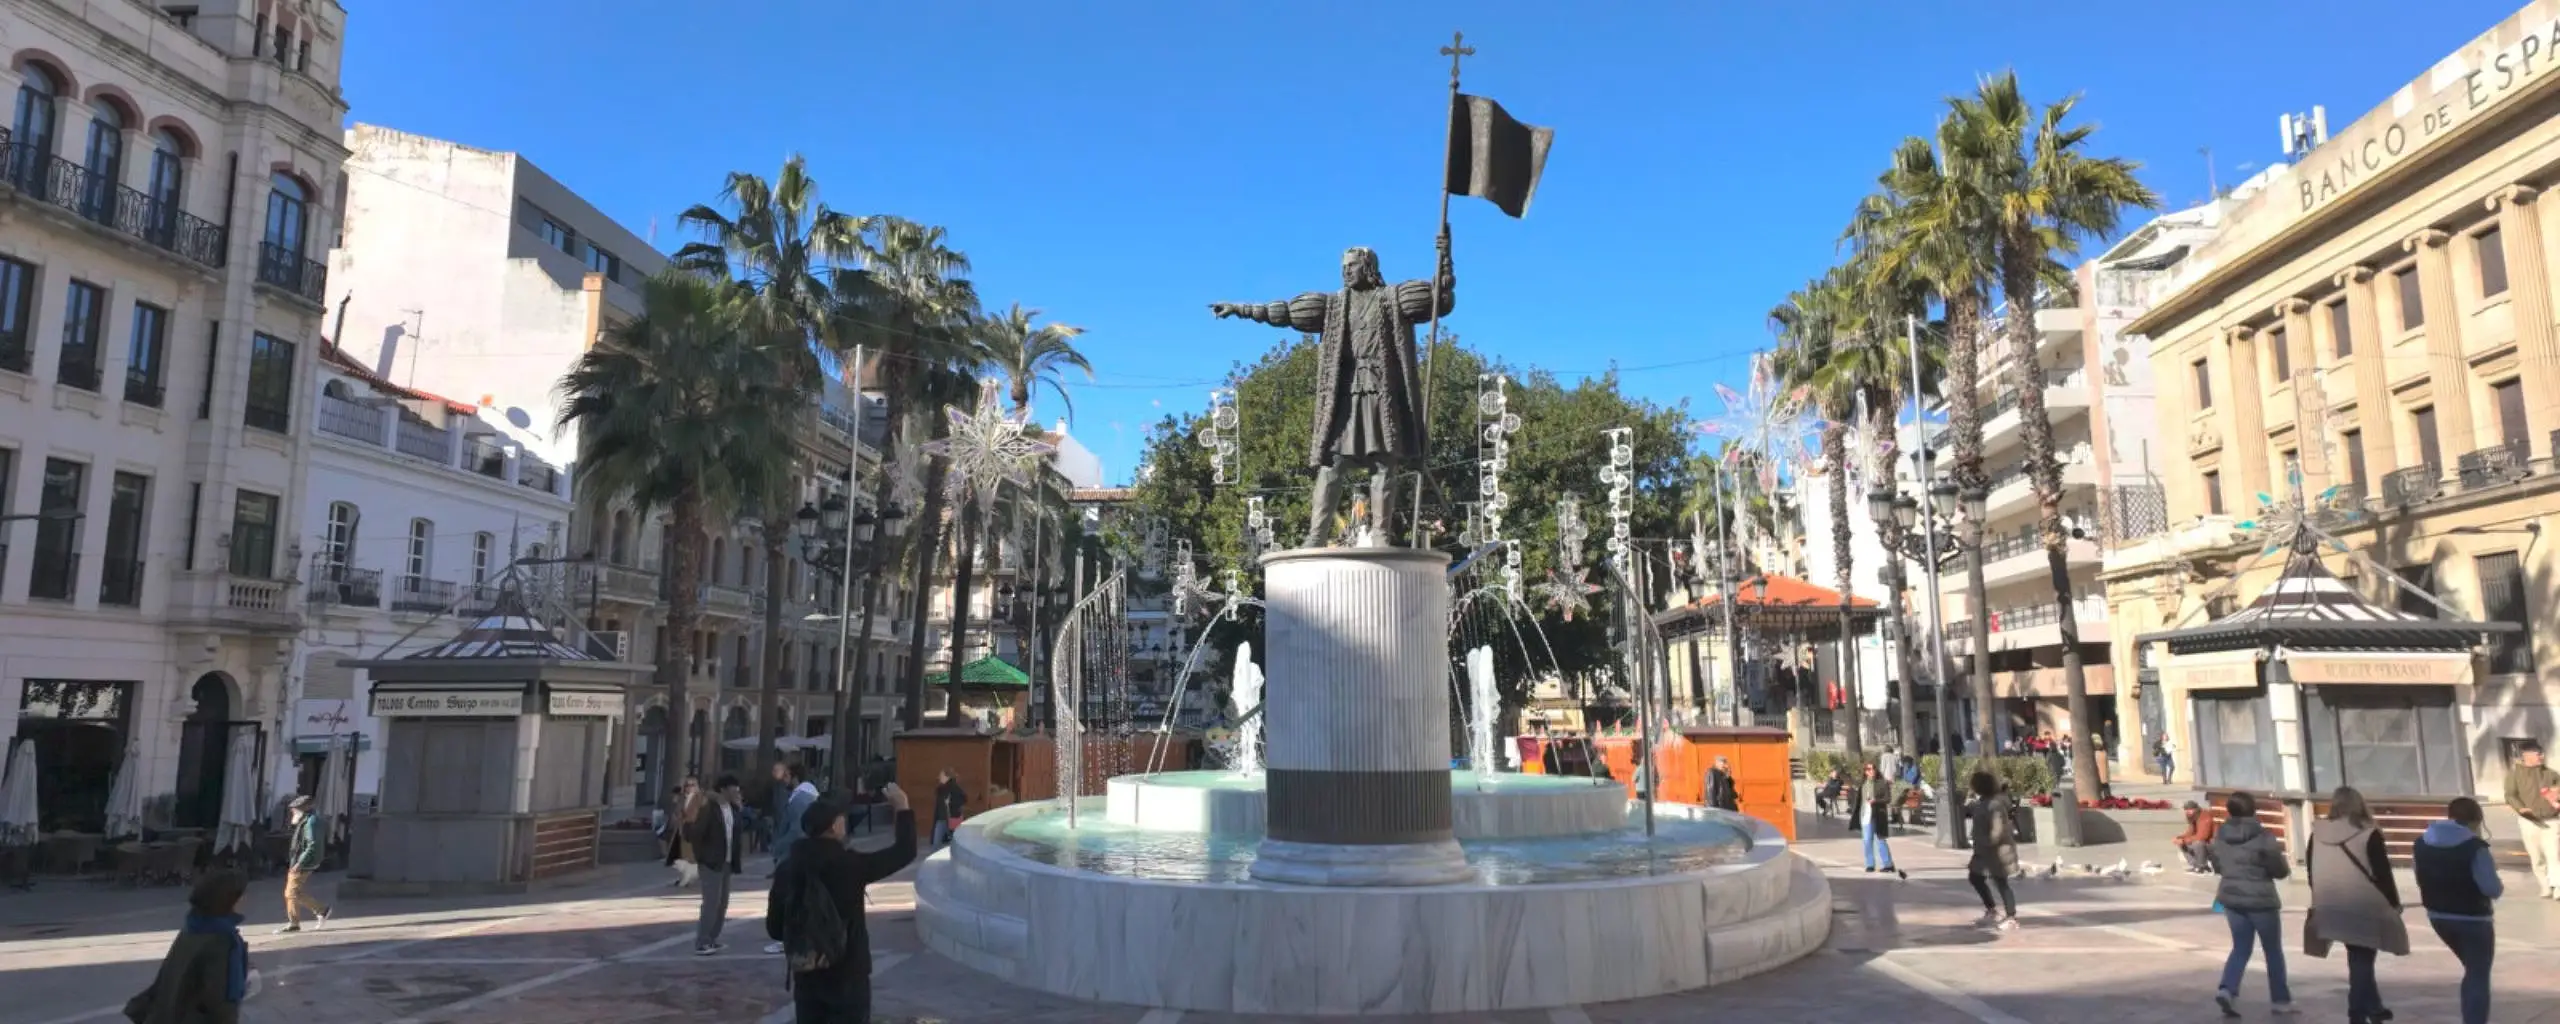 Monumento a Colón, Plaza de las Monjas